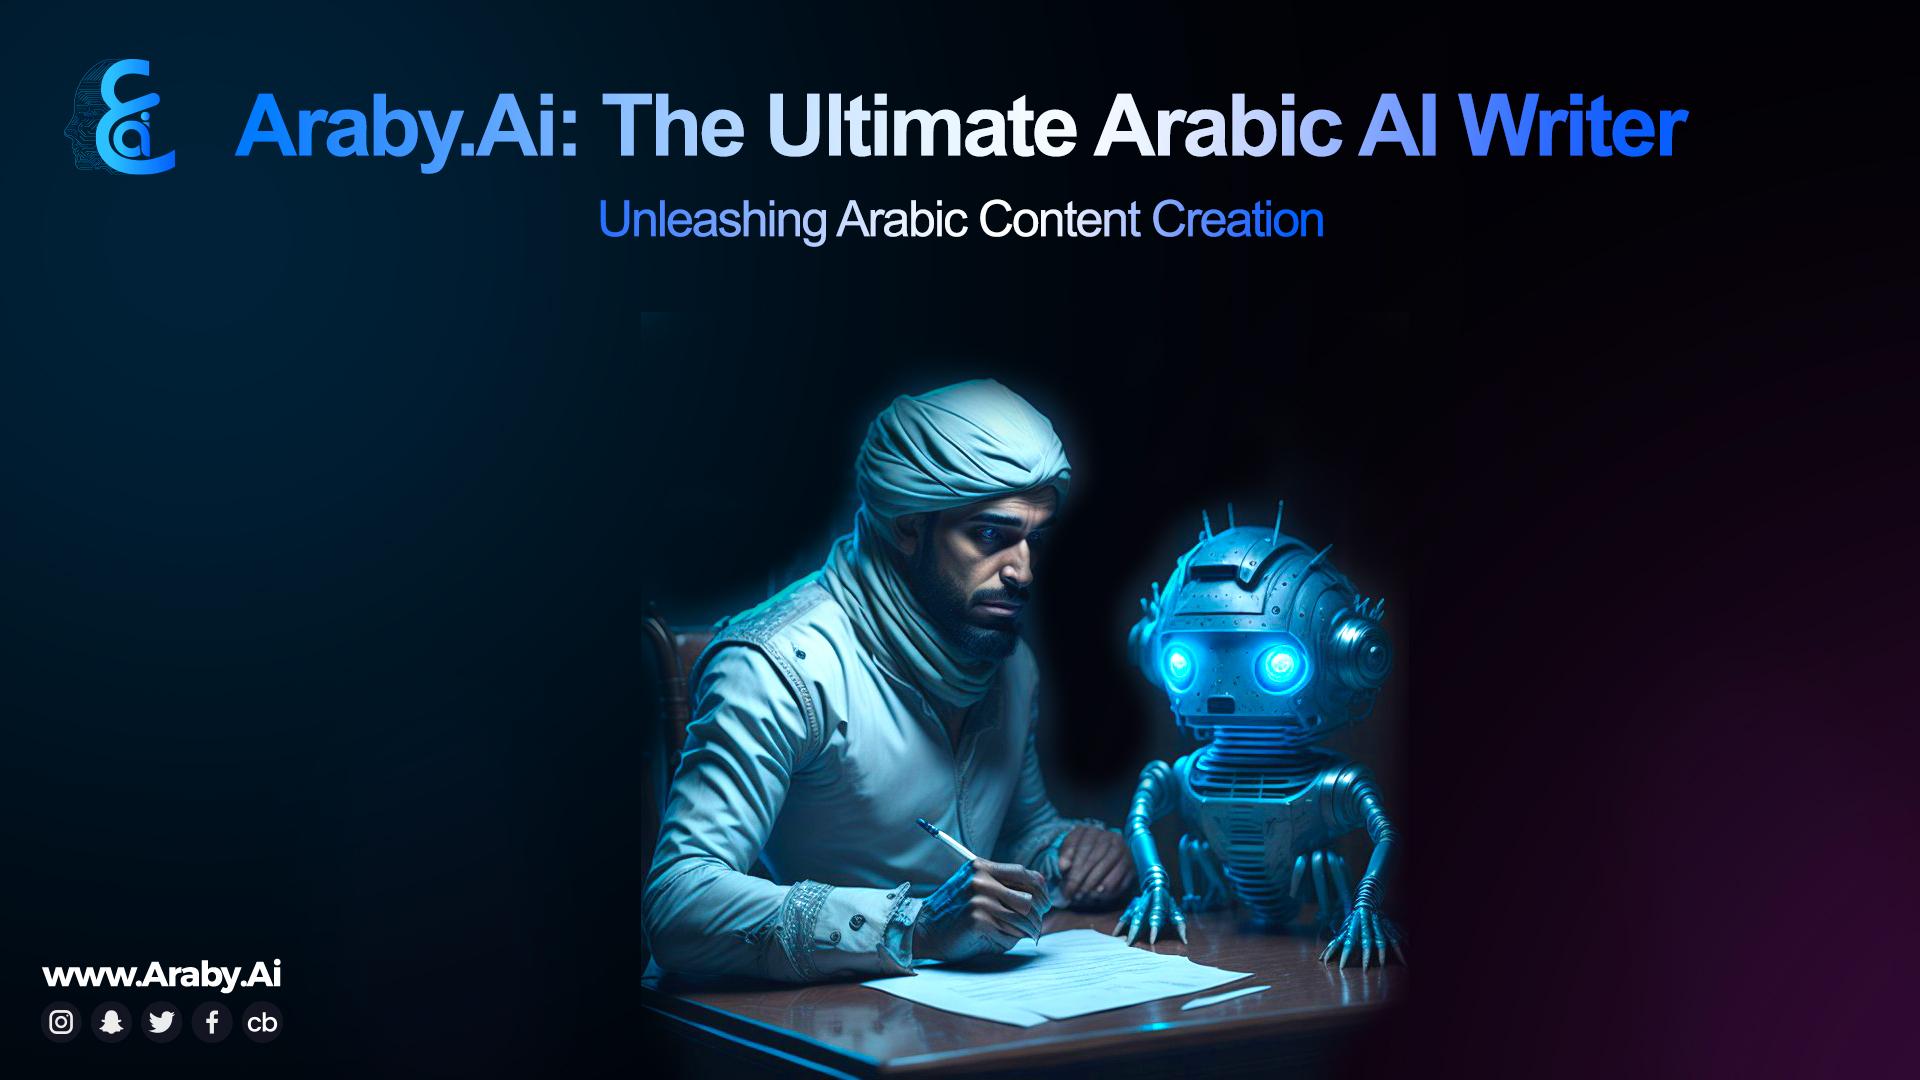 Araby.ai logo with a background of digital elements symbolizing AI technology